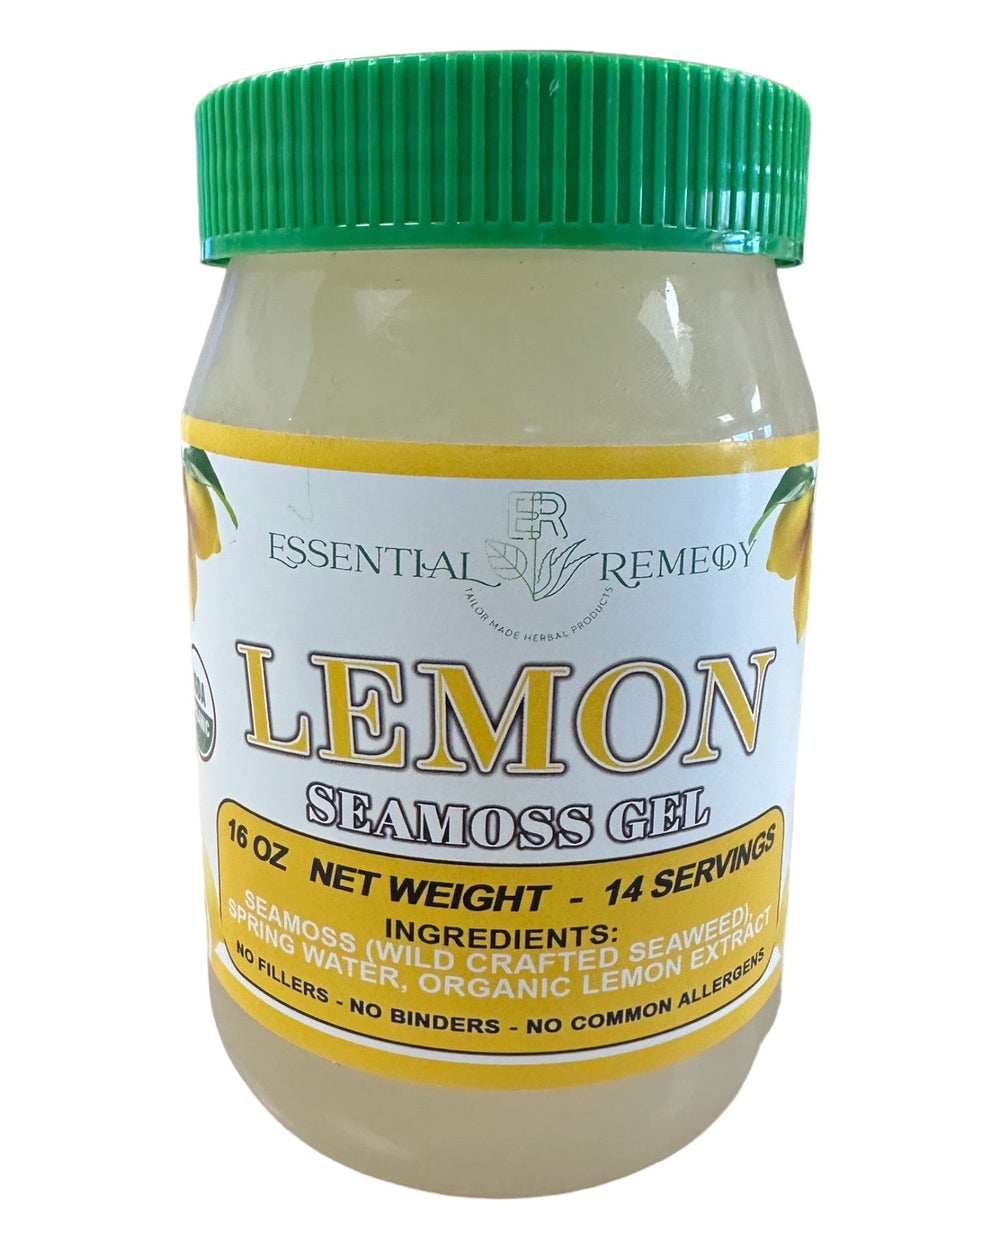 Lemon Seamoss Gel 16 oz. - Tailor Made Herbal Products